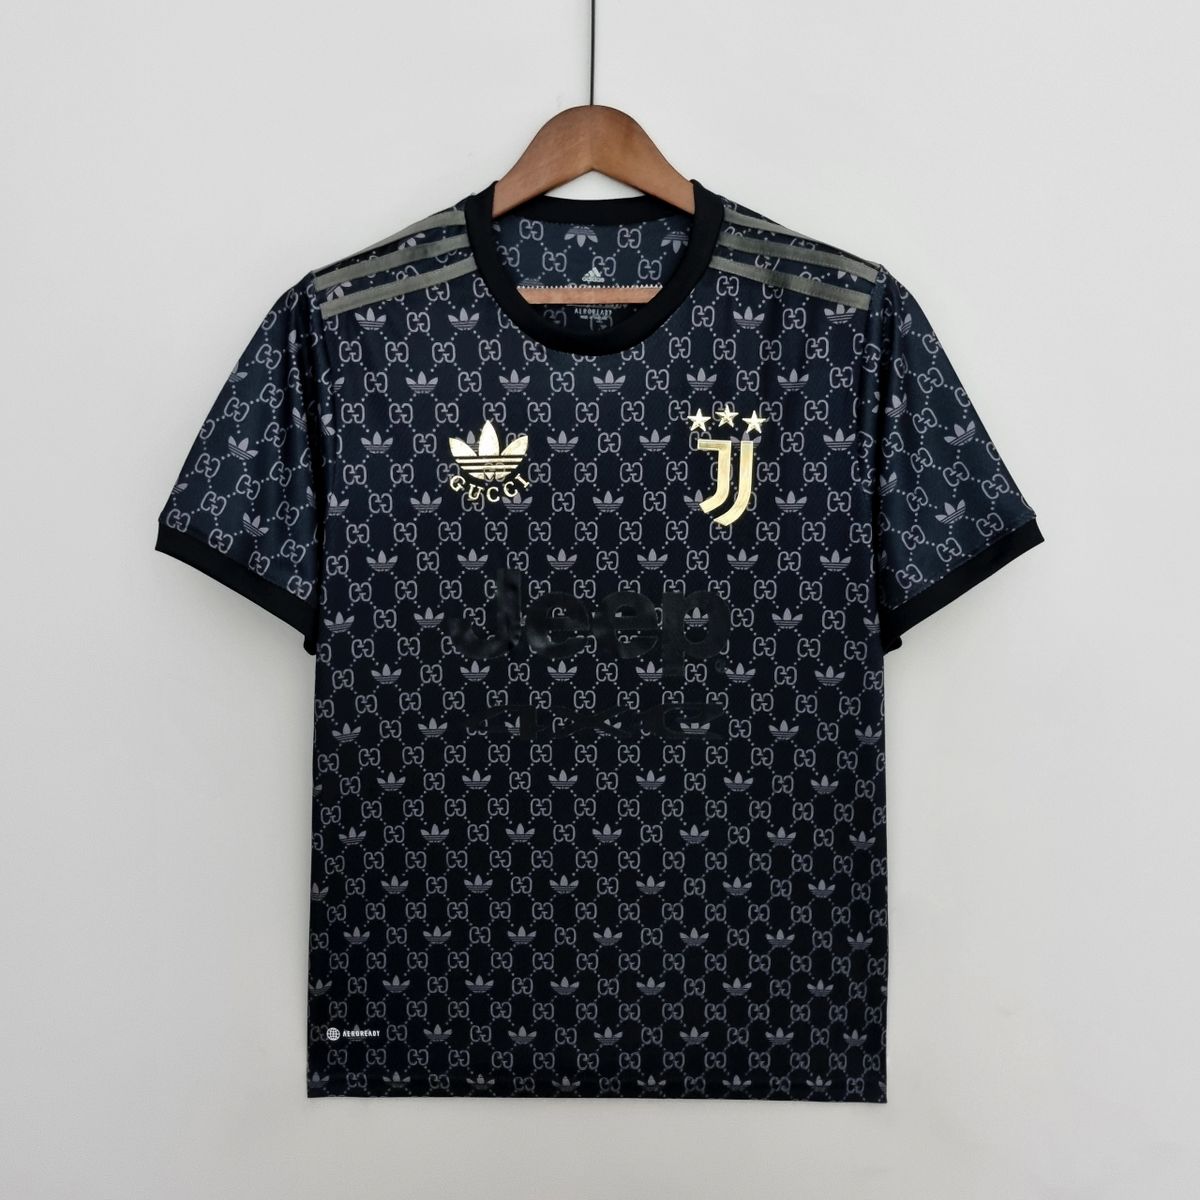 Juventus x Adidas & Gucci Special Edition